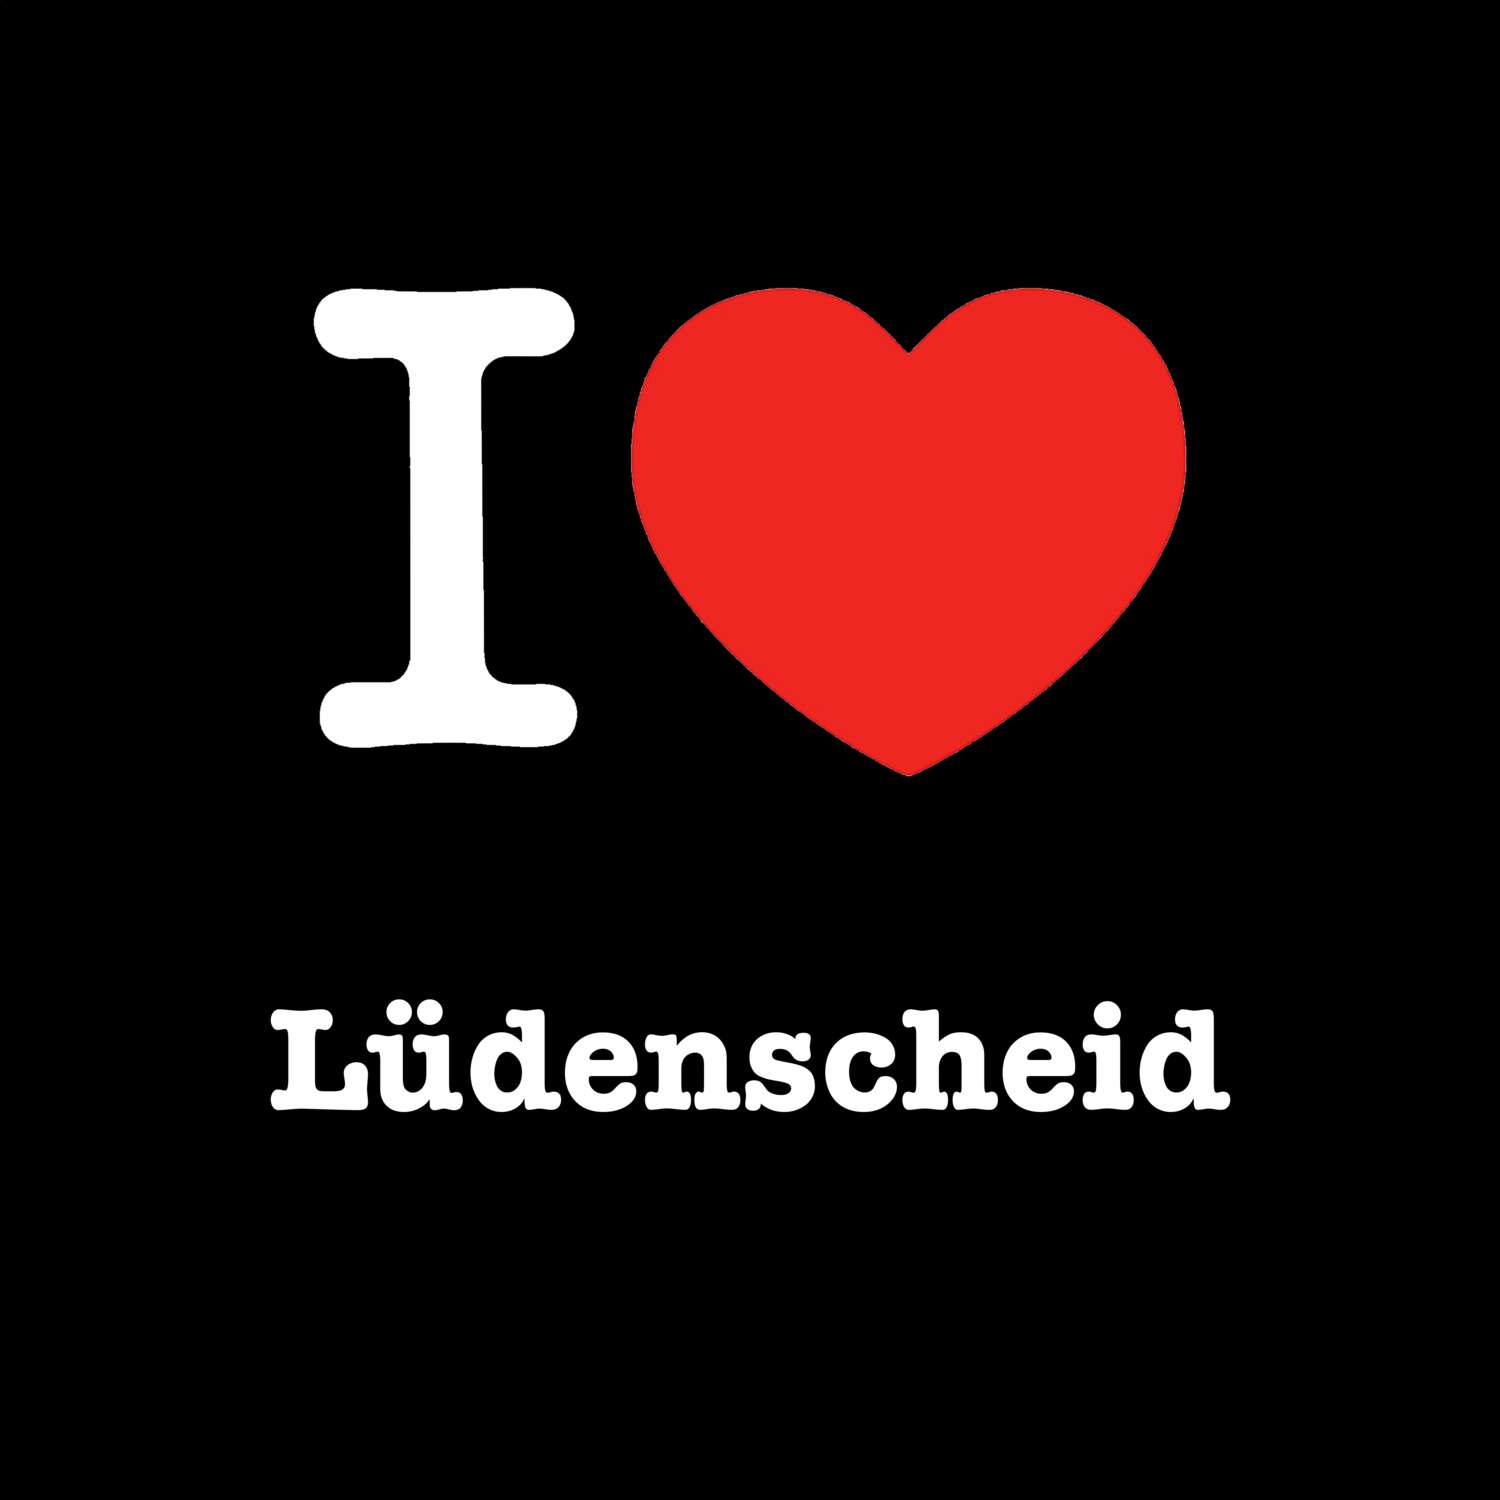 Lüdenscheid T-Shirt »I love«